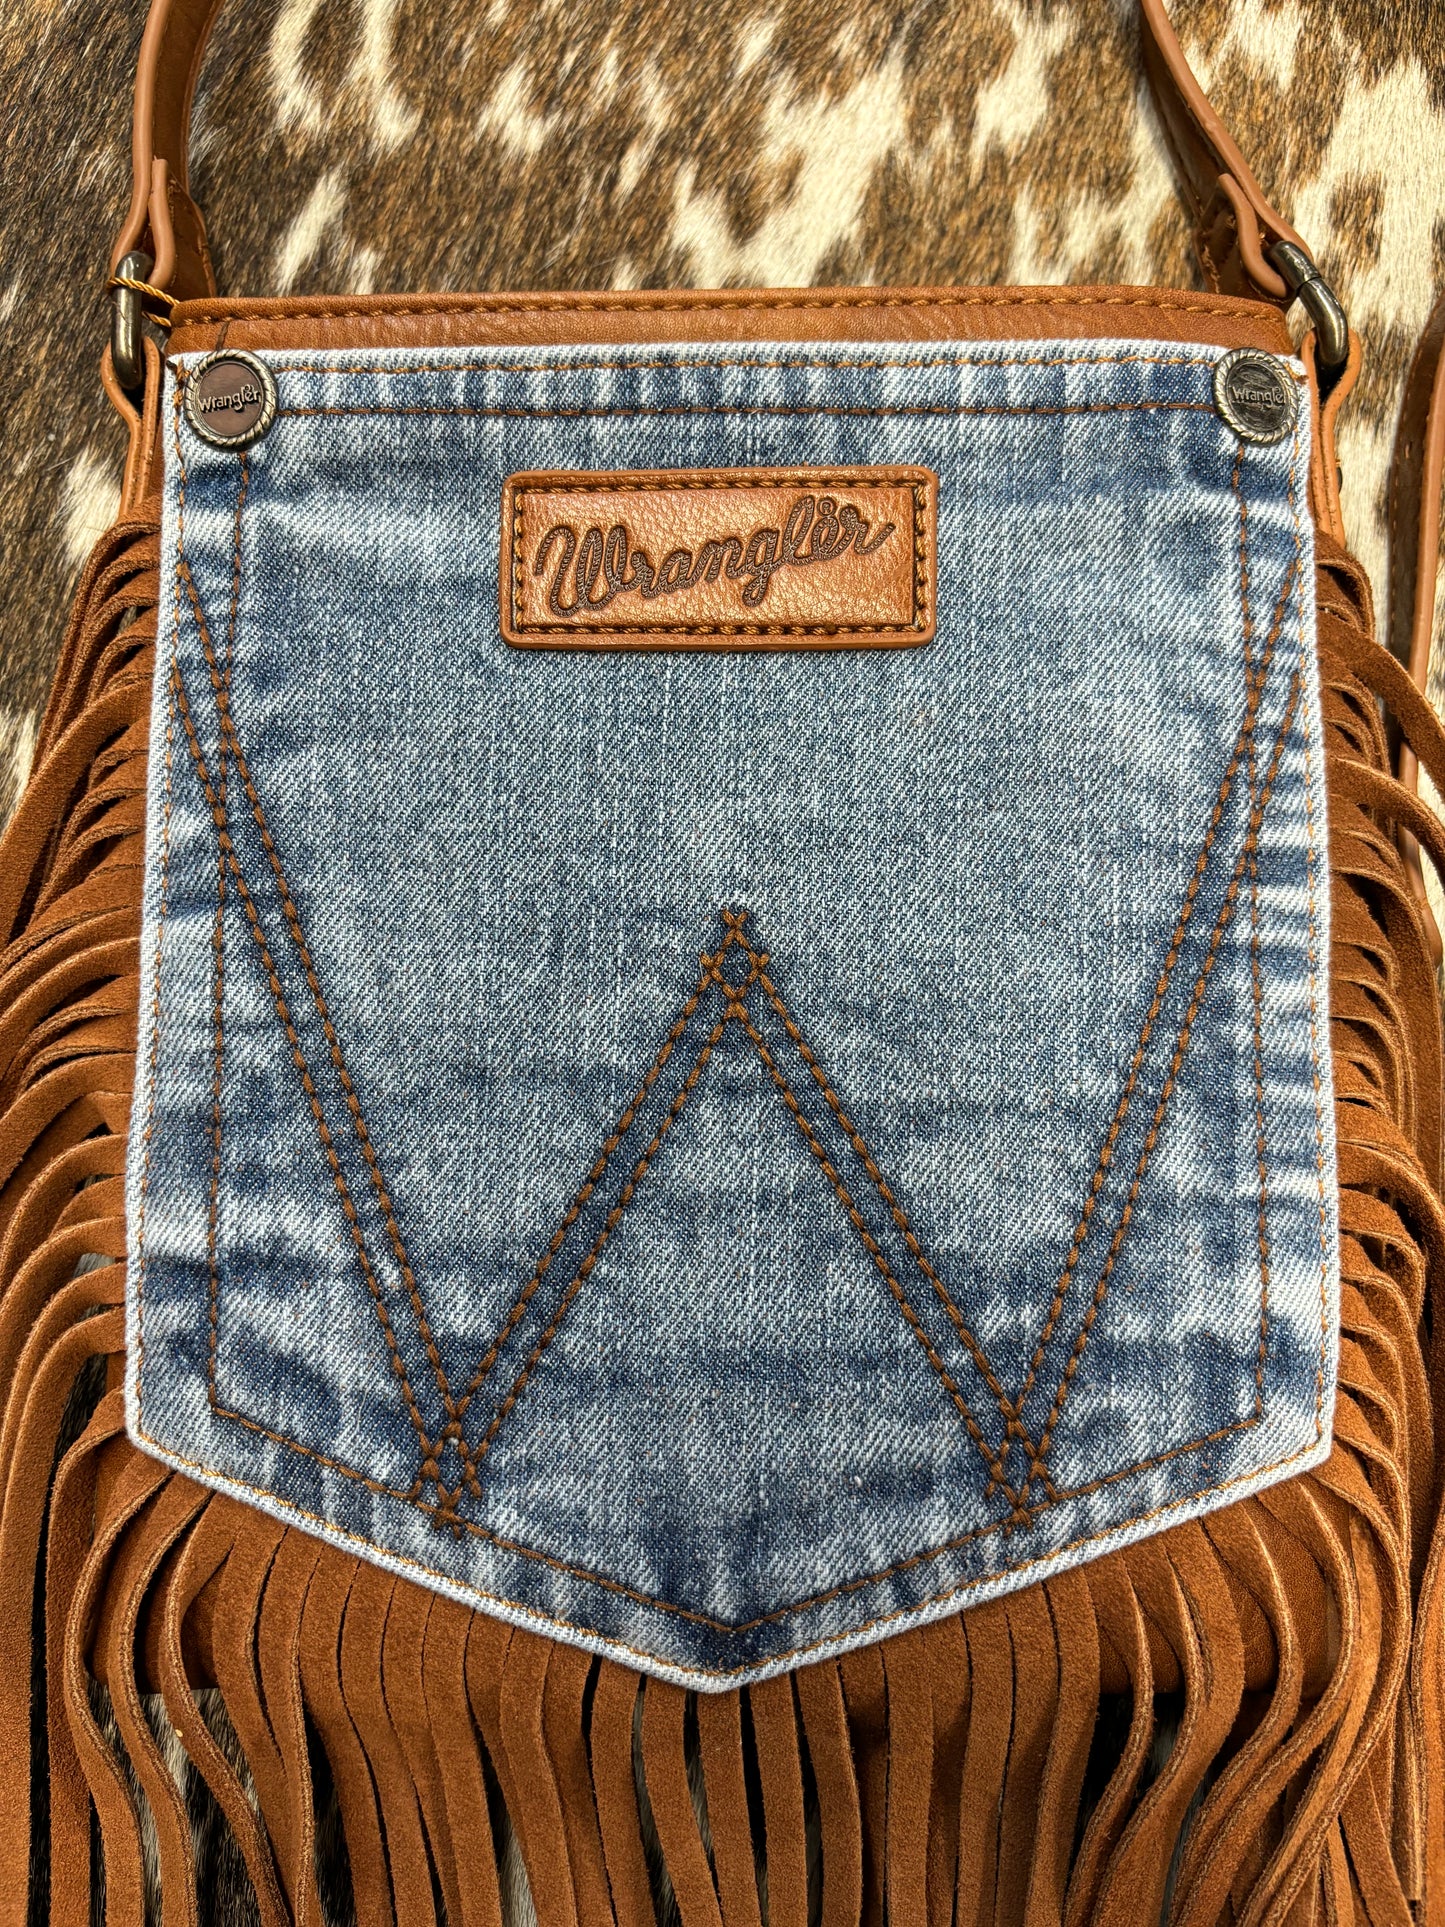 The Wrangler Leather Fringe Jean Pocket Crossbody - Tan